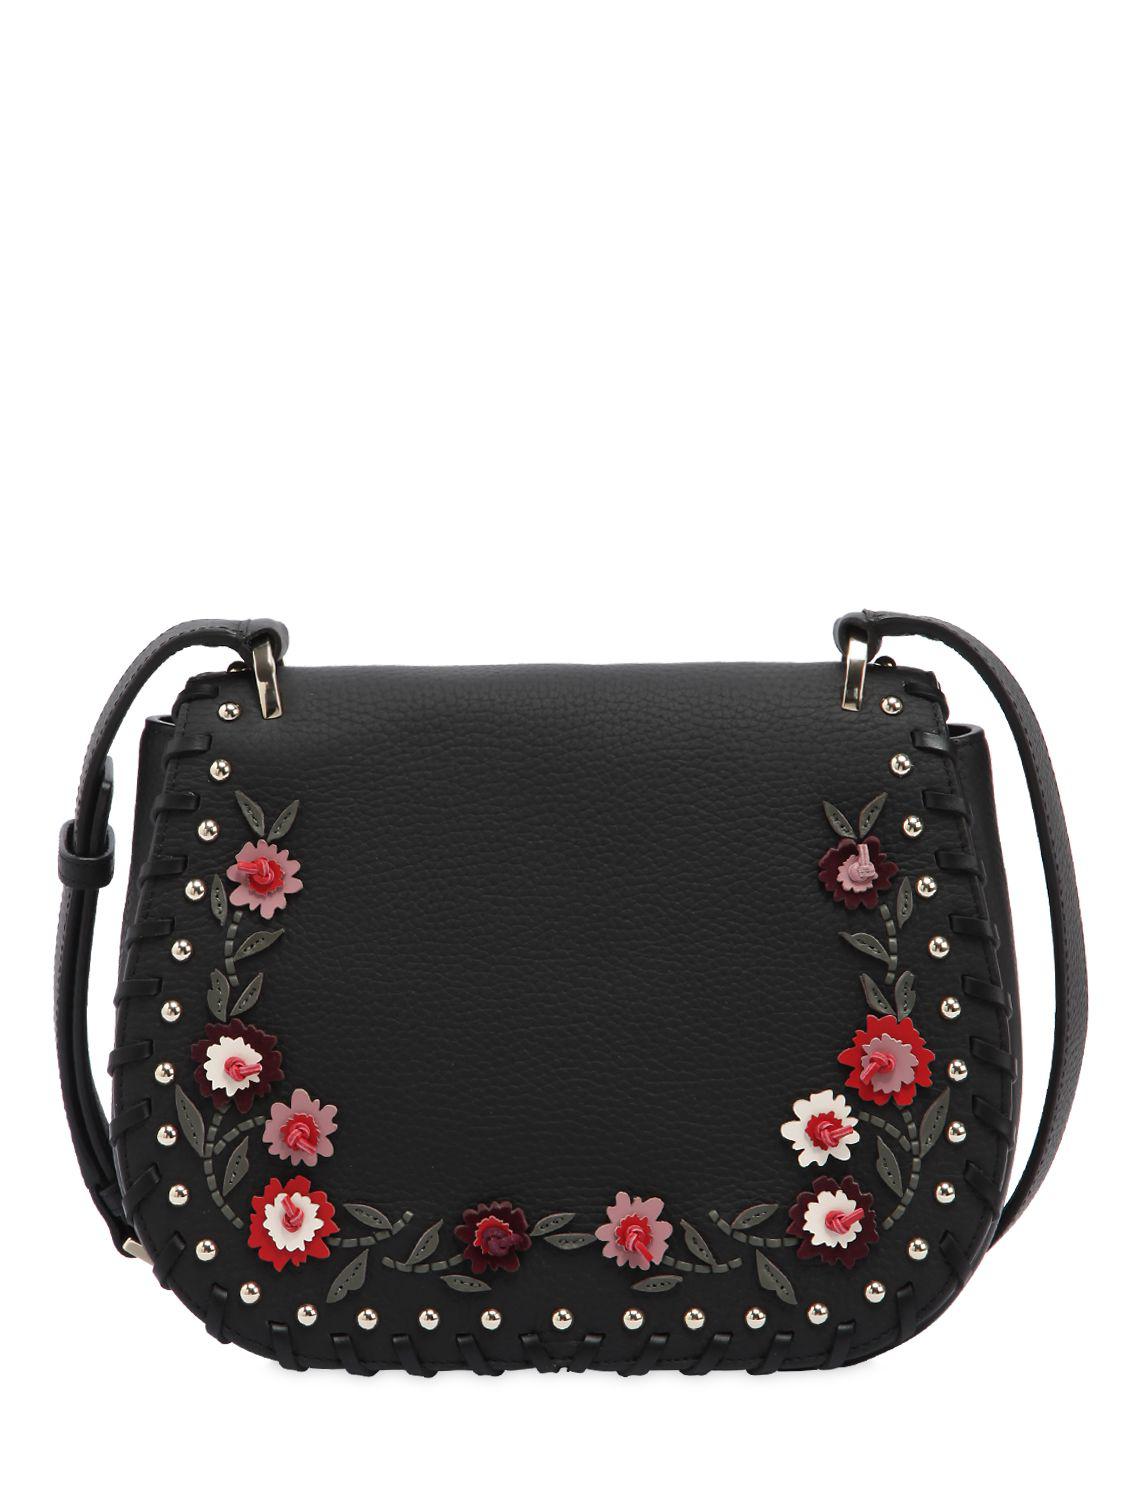 Kate Spade Tressa Floral Appliqués Leather Bag in Black | Lyst